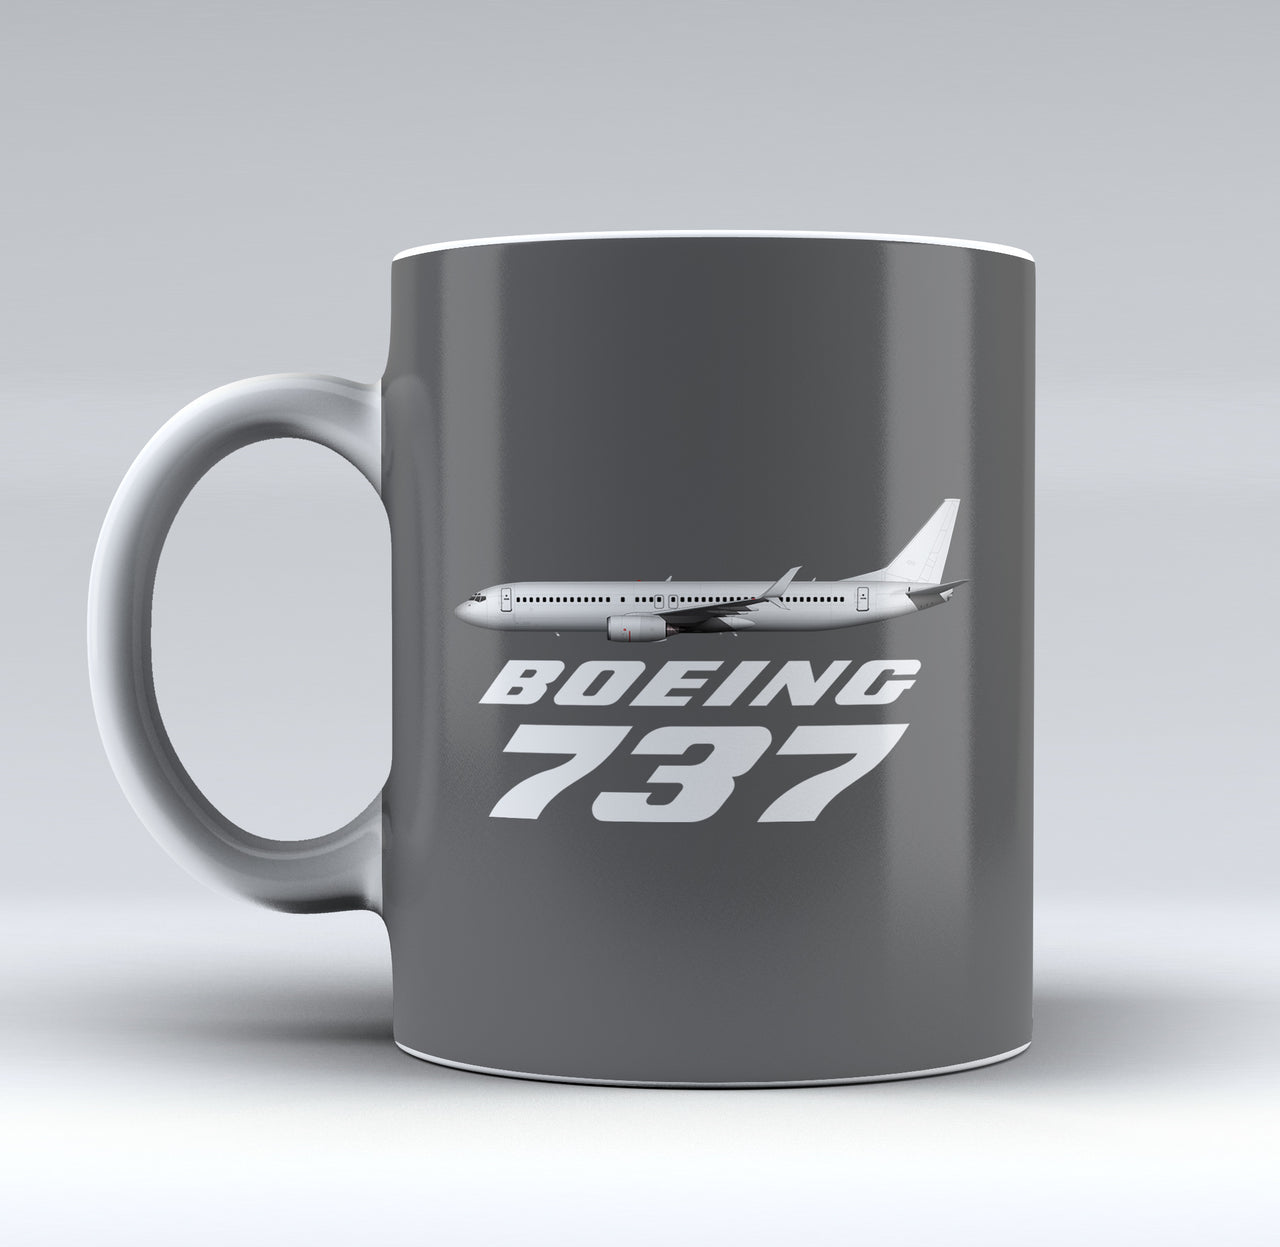 The Boeing 737 Designed Mugs